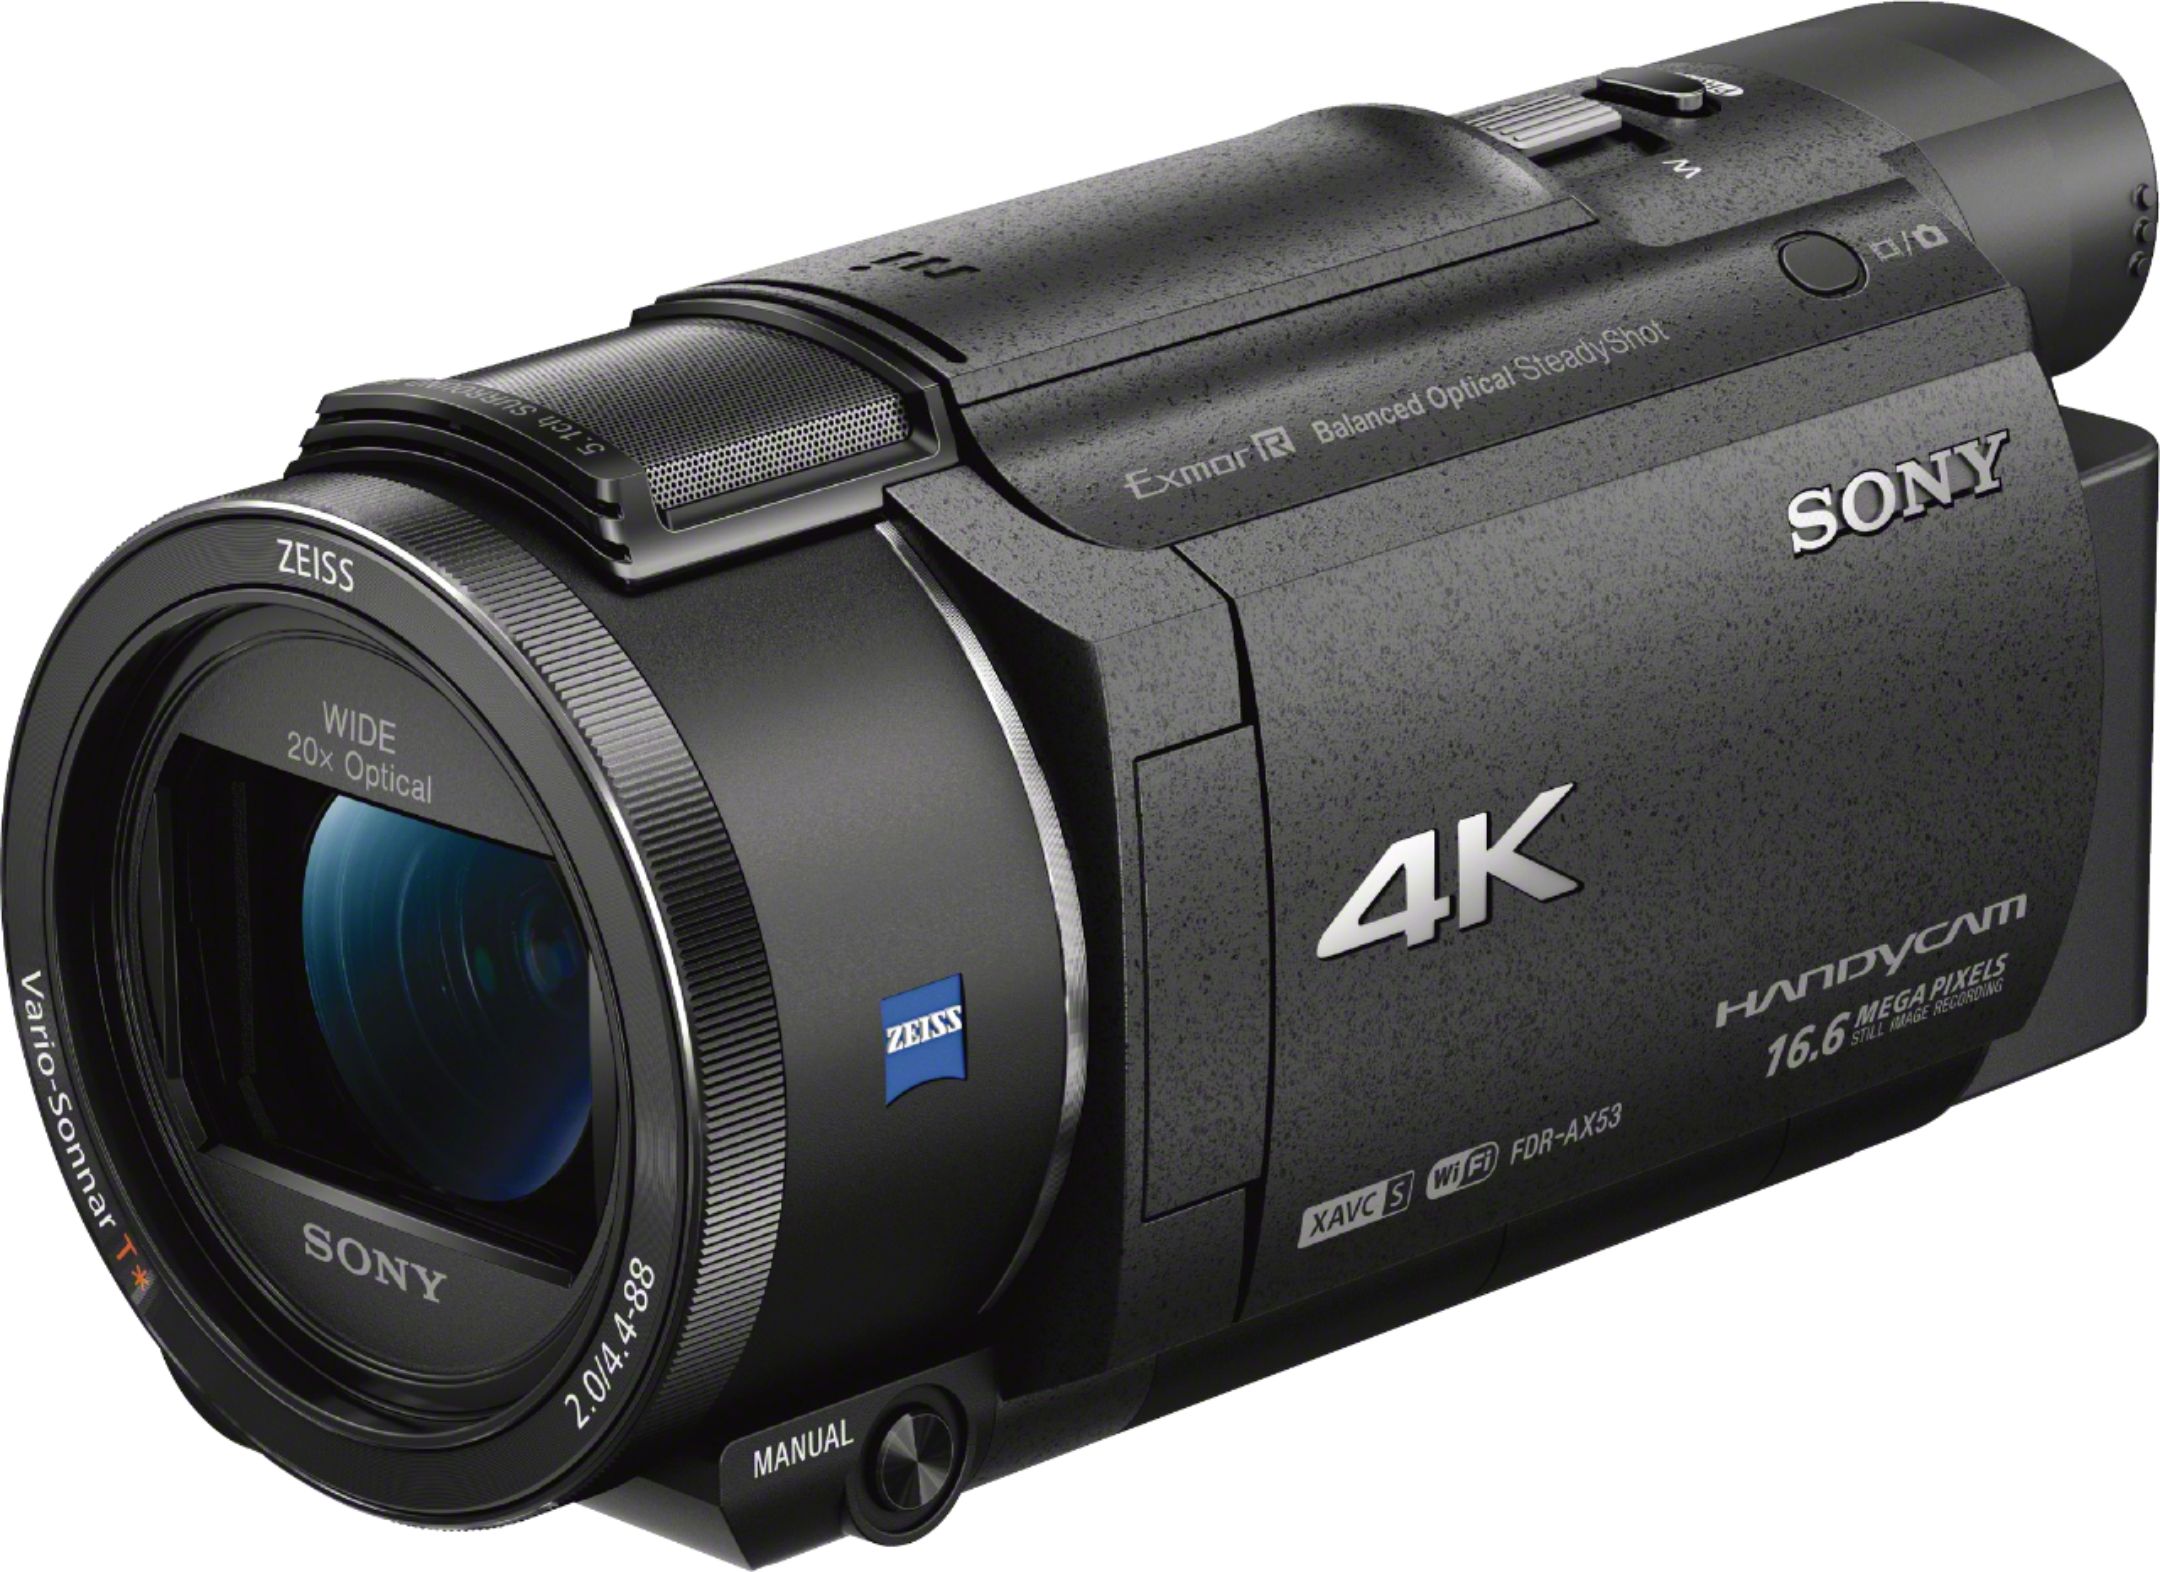 Angle View: Sony - Handycam AX53 4K Flash Memory Premium Camcorder - Black